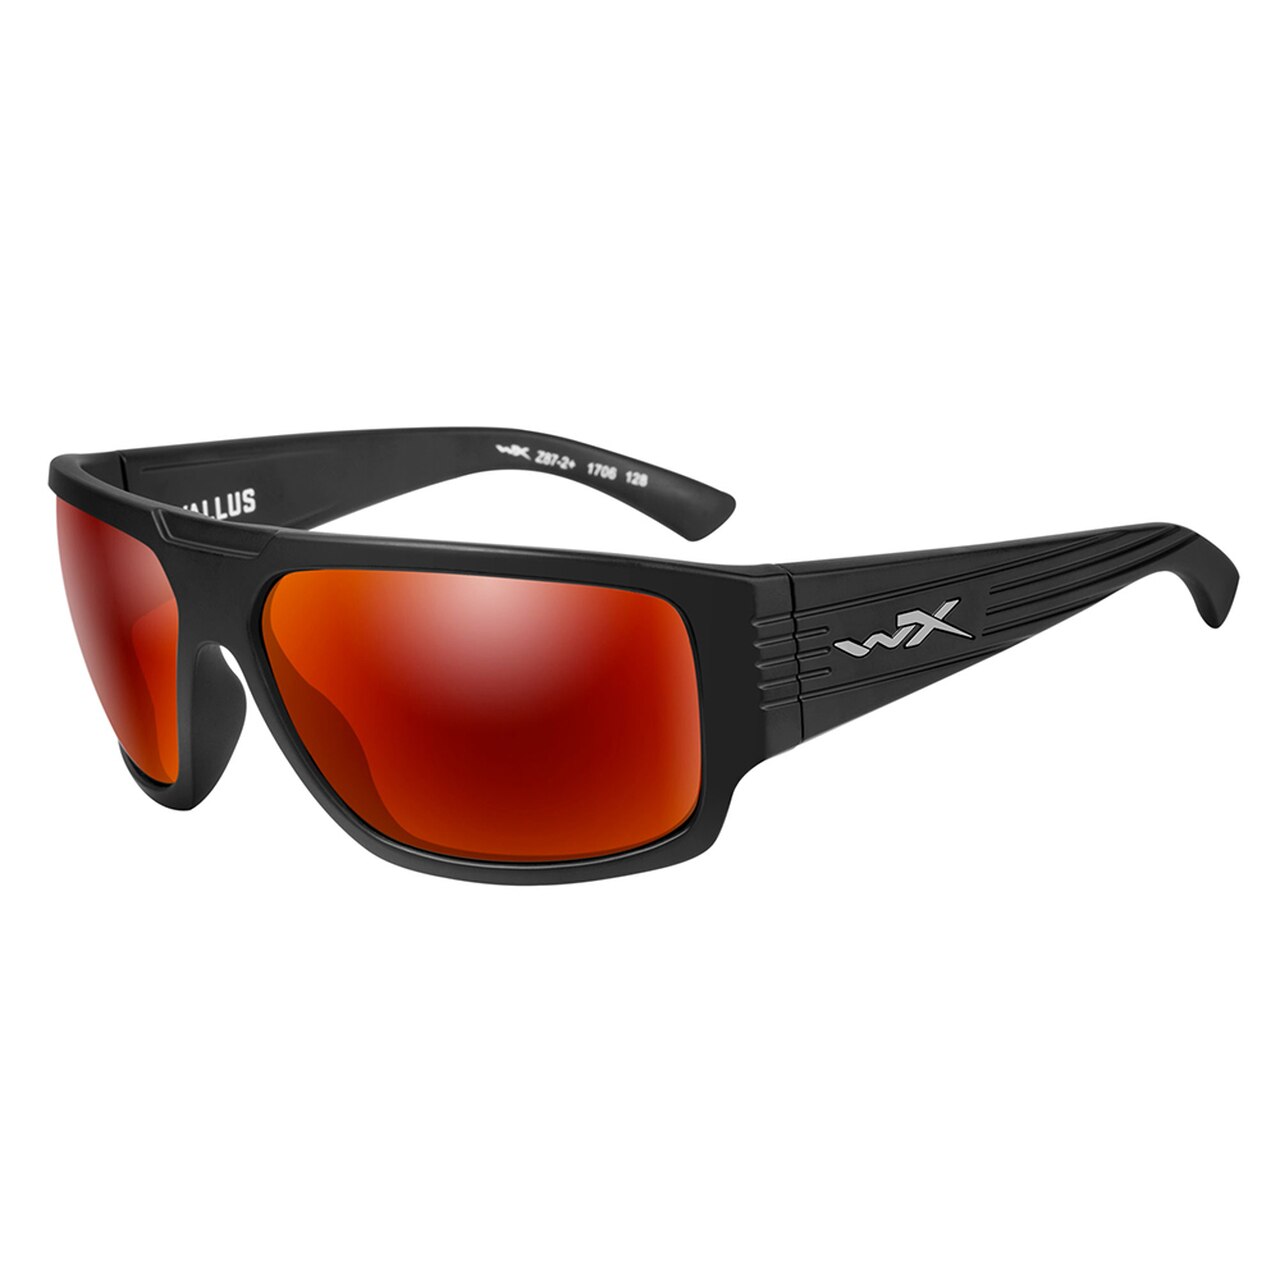 Wiley X Vallus Sunglasses Polarised Crimson Mirror Matte Black Frame Tactical Distributors Ltd New Zealand